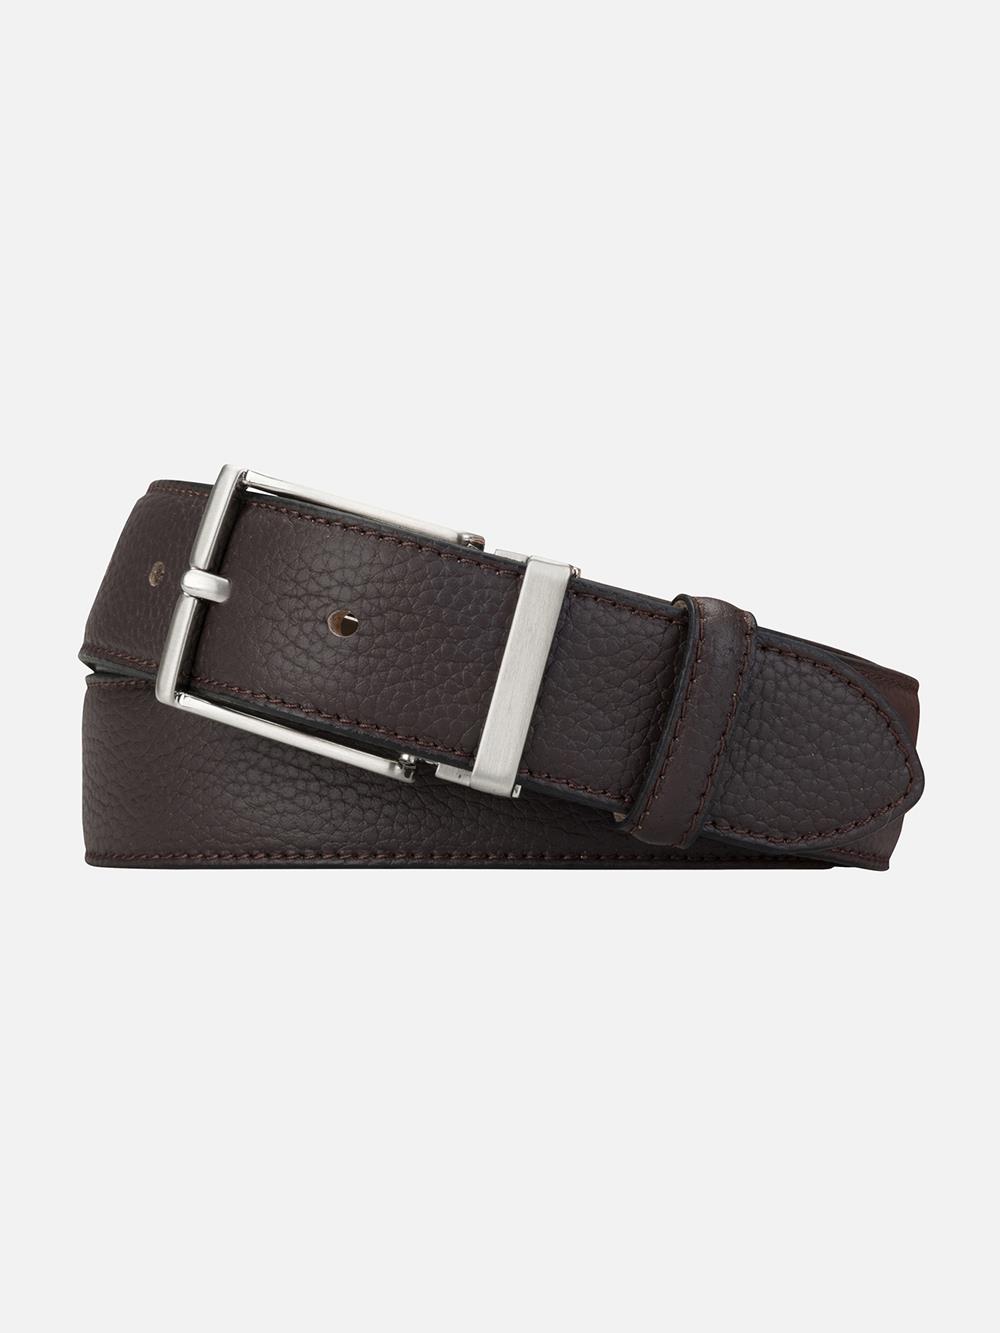 Chocolate calf leather belt